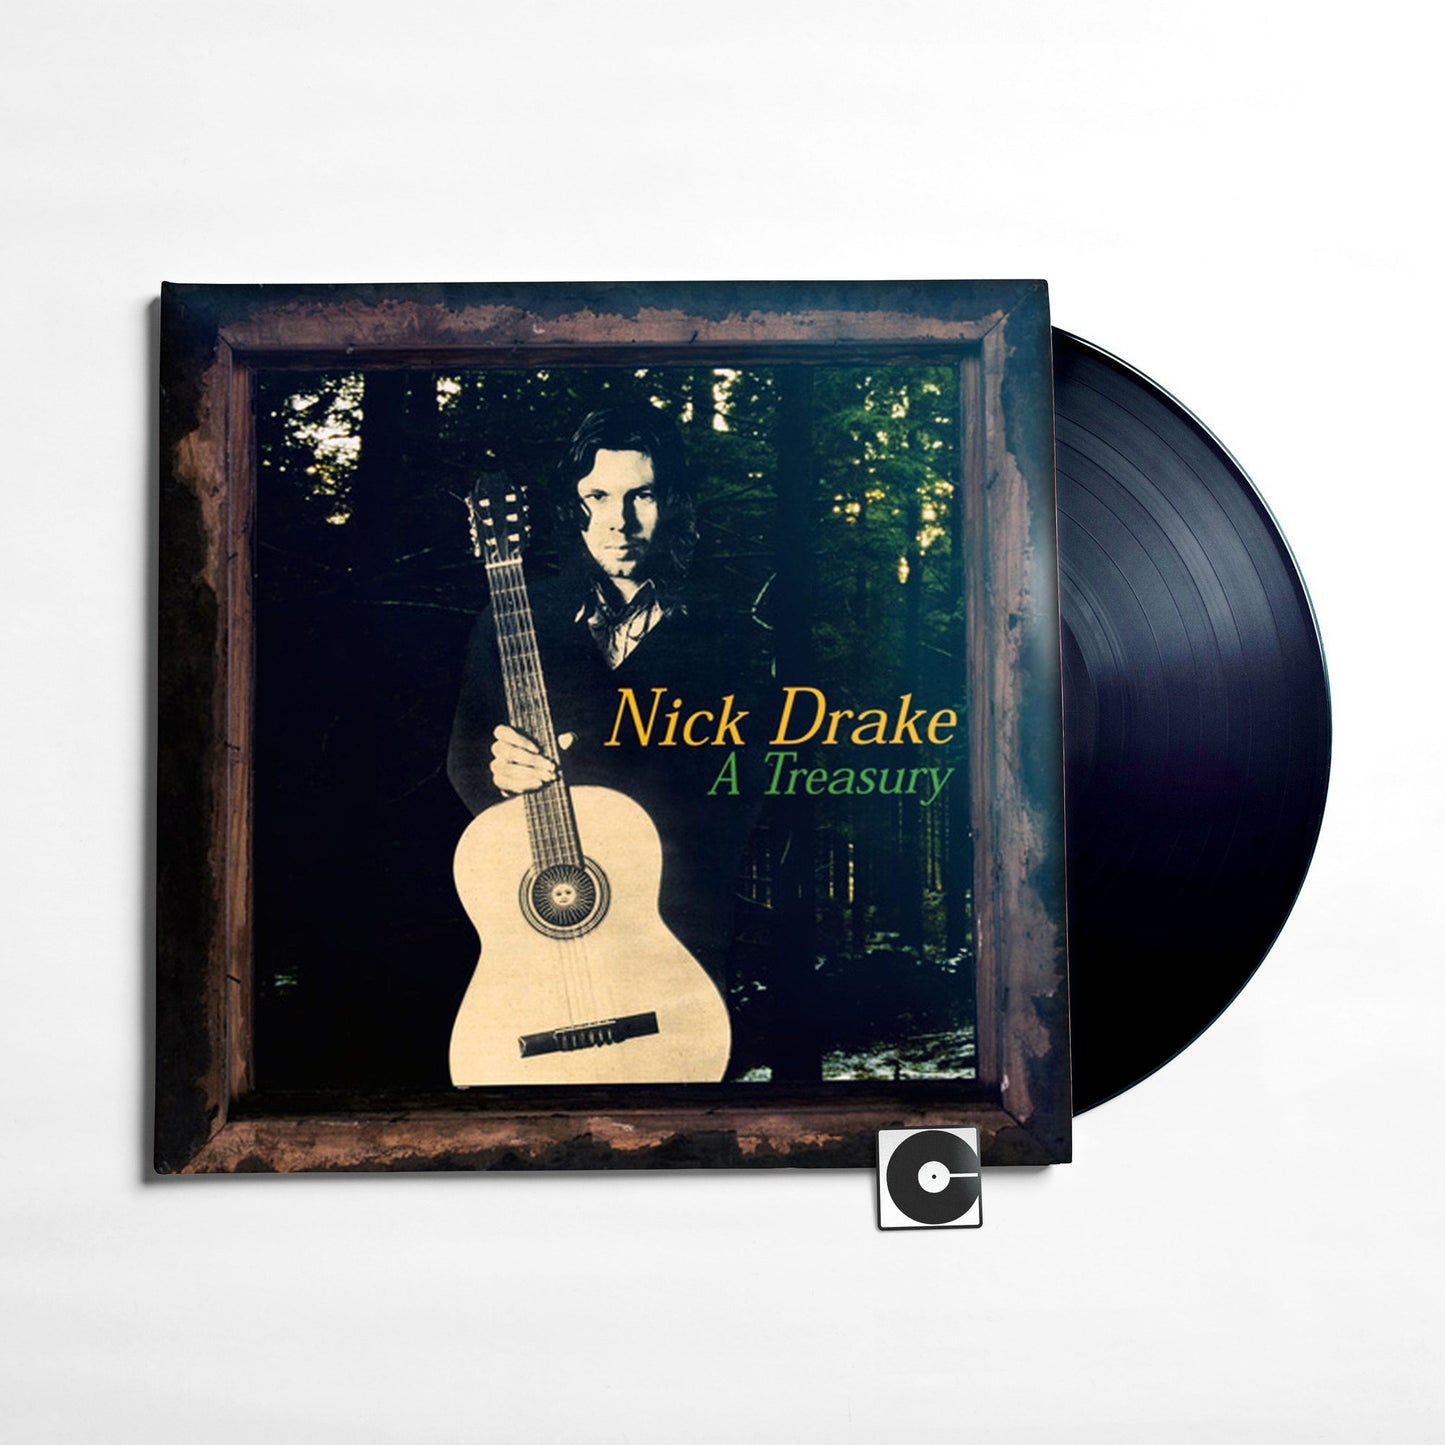 Nick Drake - "A Treasury"